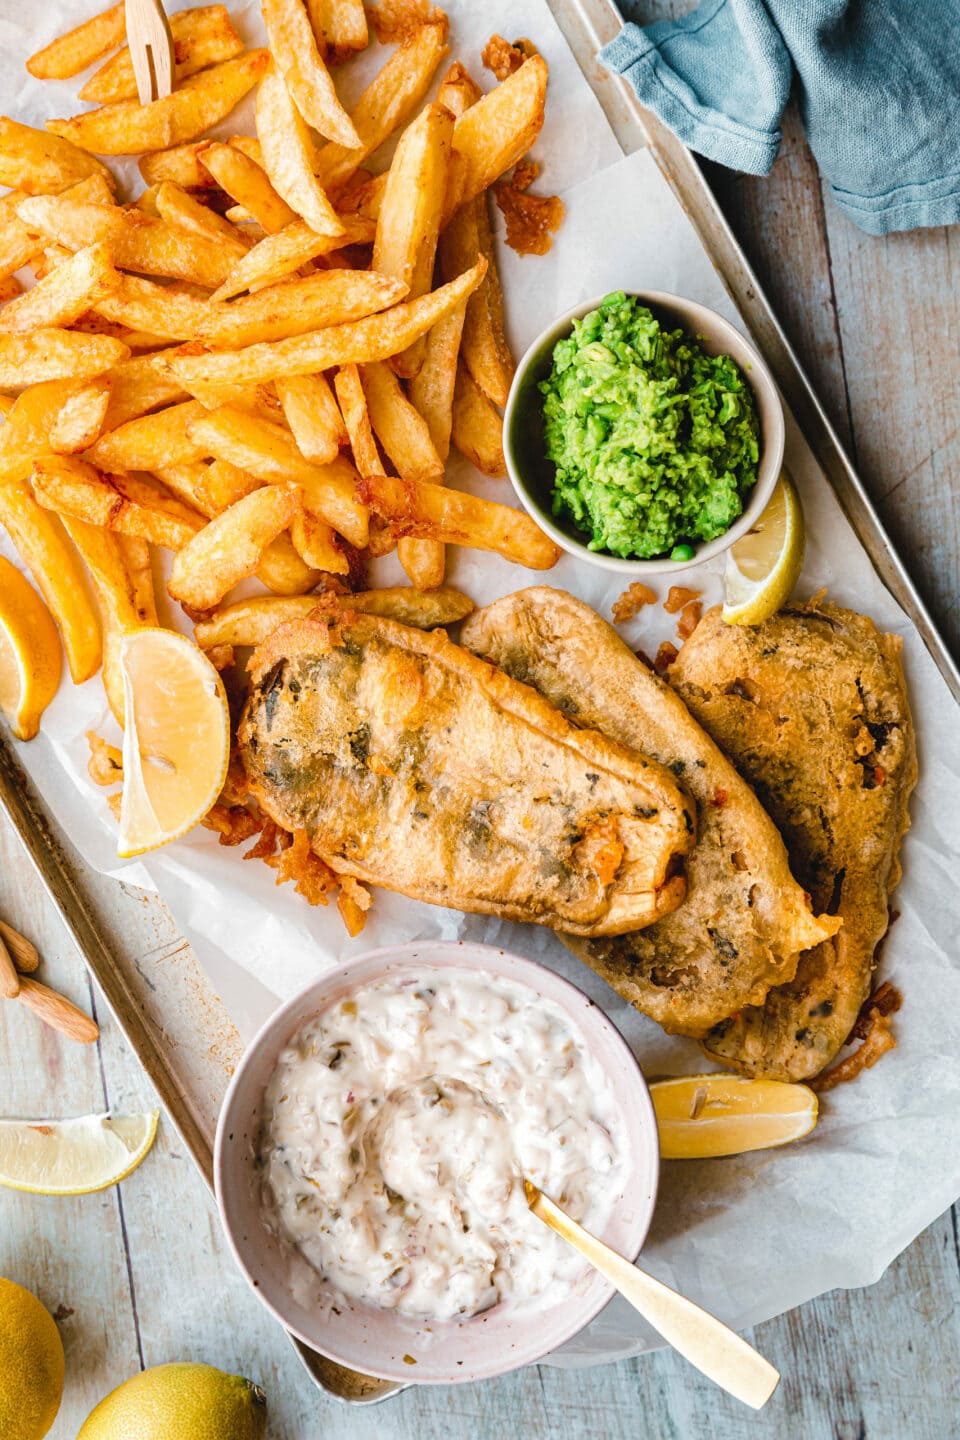 Vegane Fish and Chips